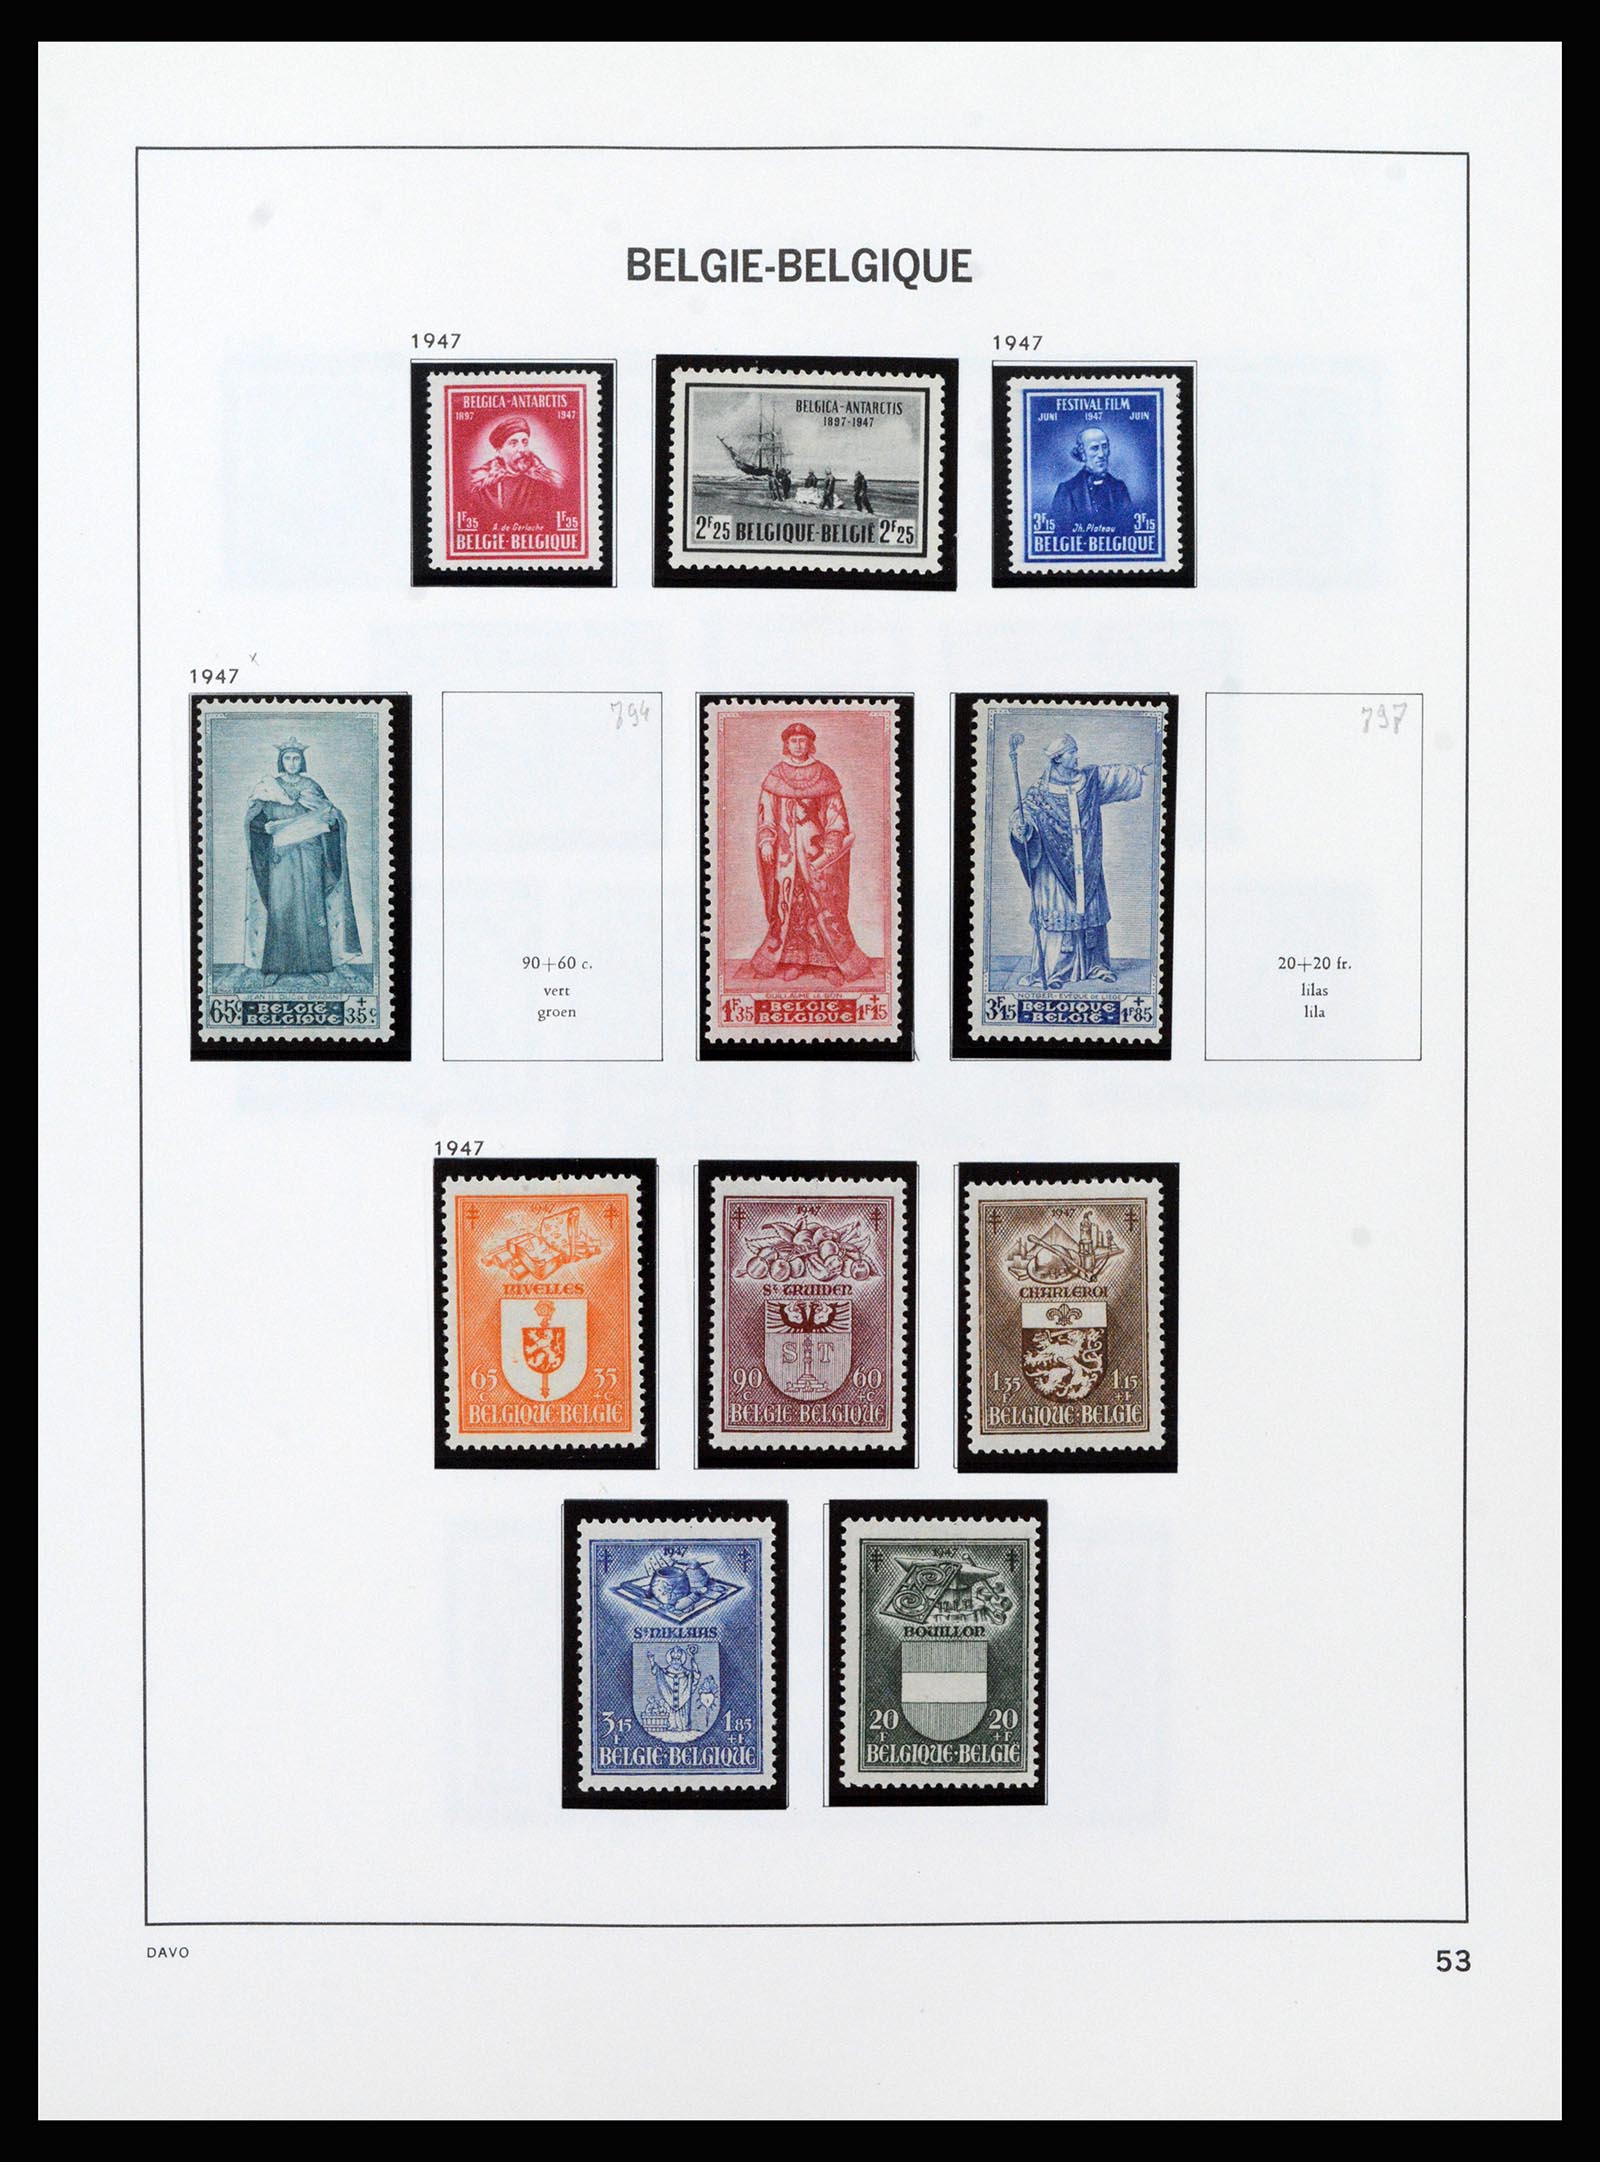 37189 055 - Stamp collection 37189 Belgium 1849-2006.